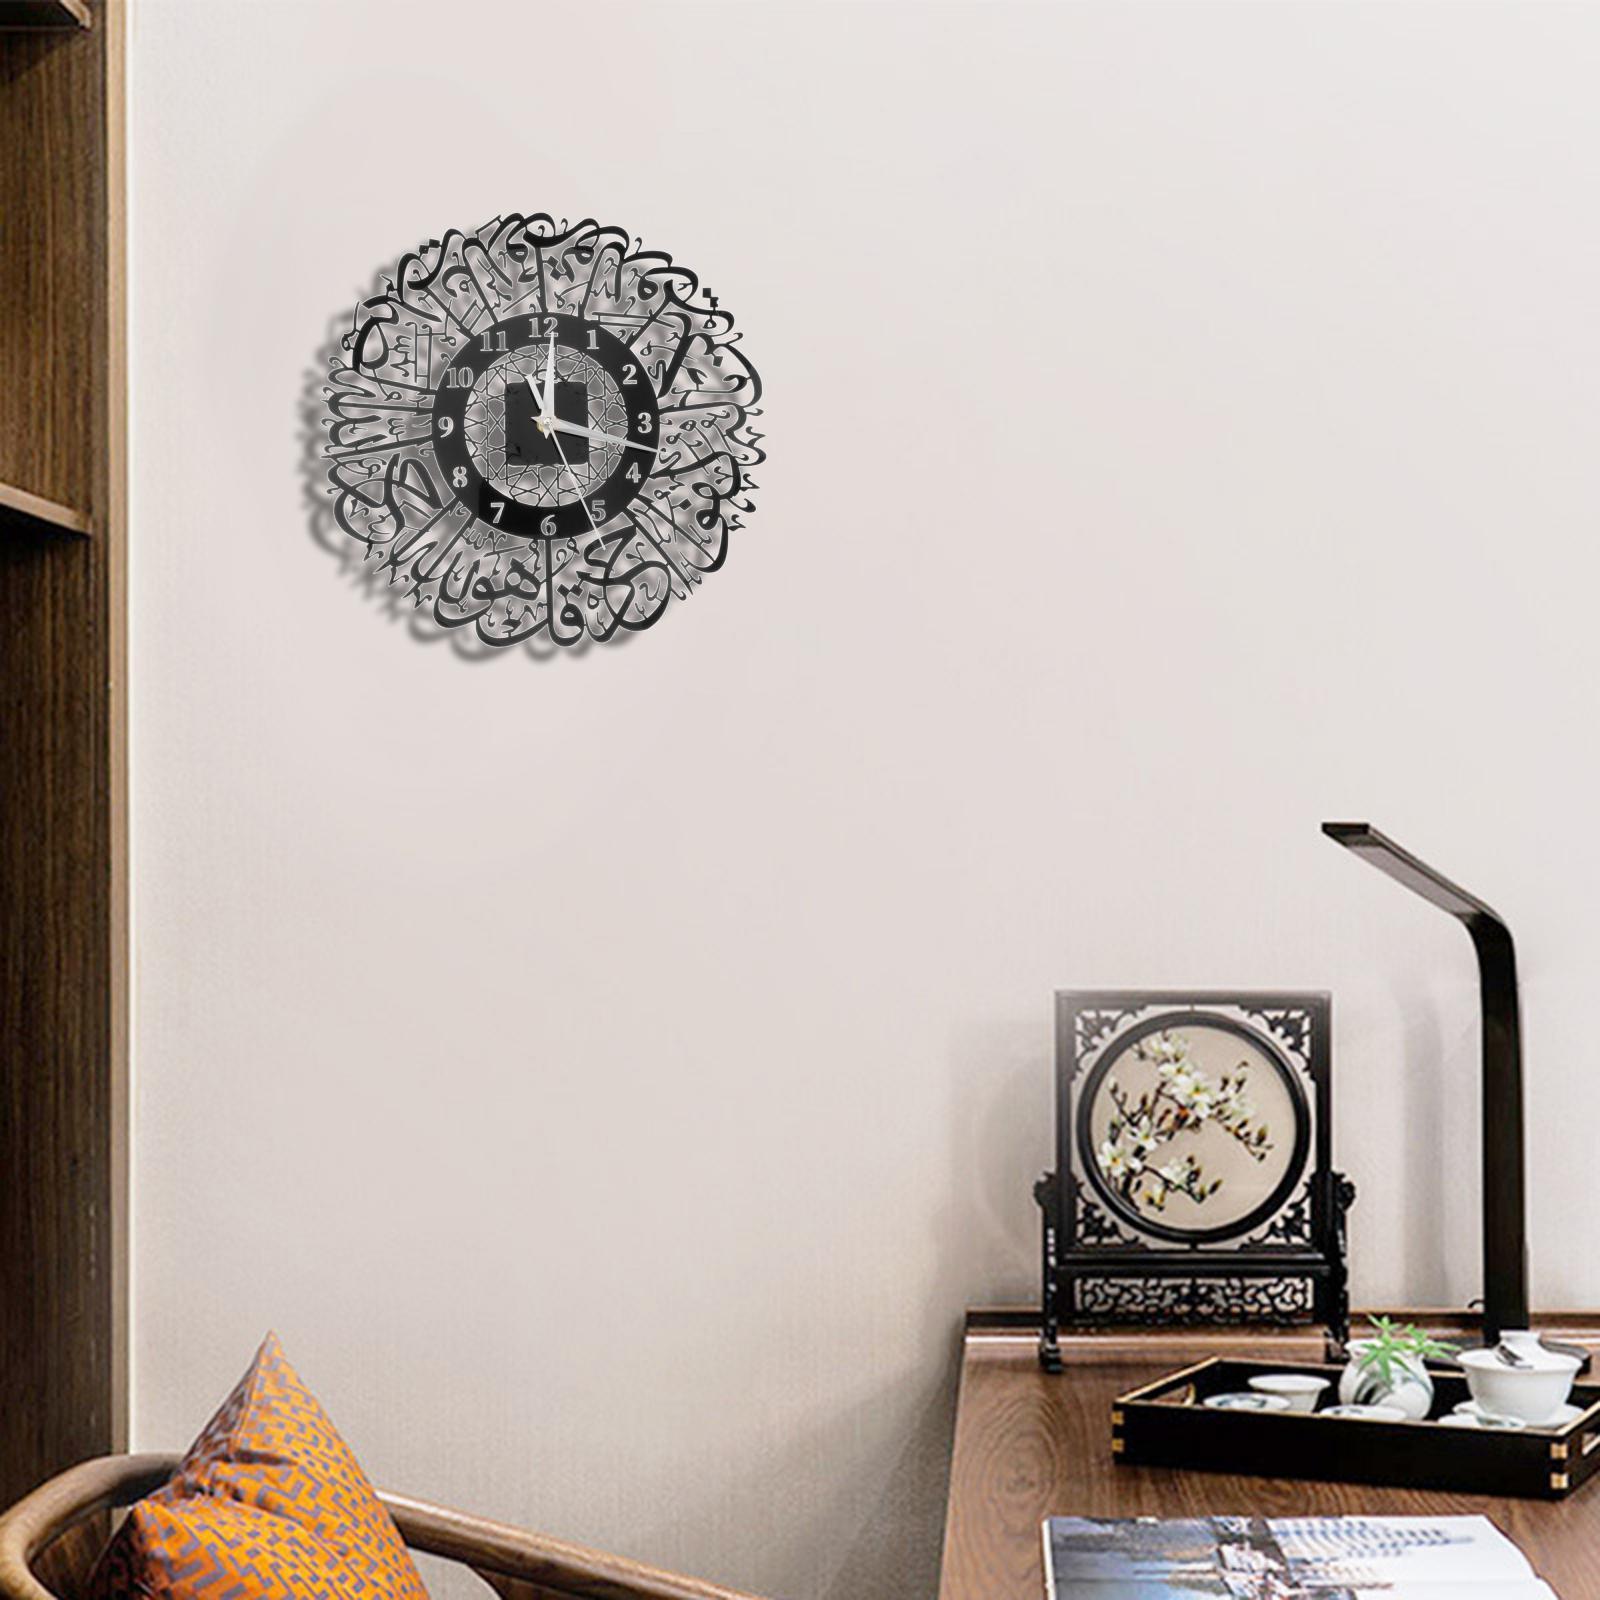 Calligraphy Round Acrylic Wall Clock Home Wall Decor